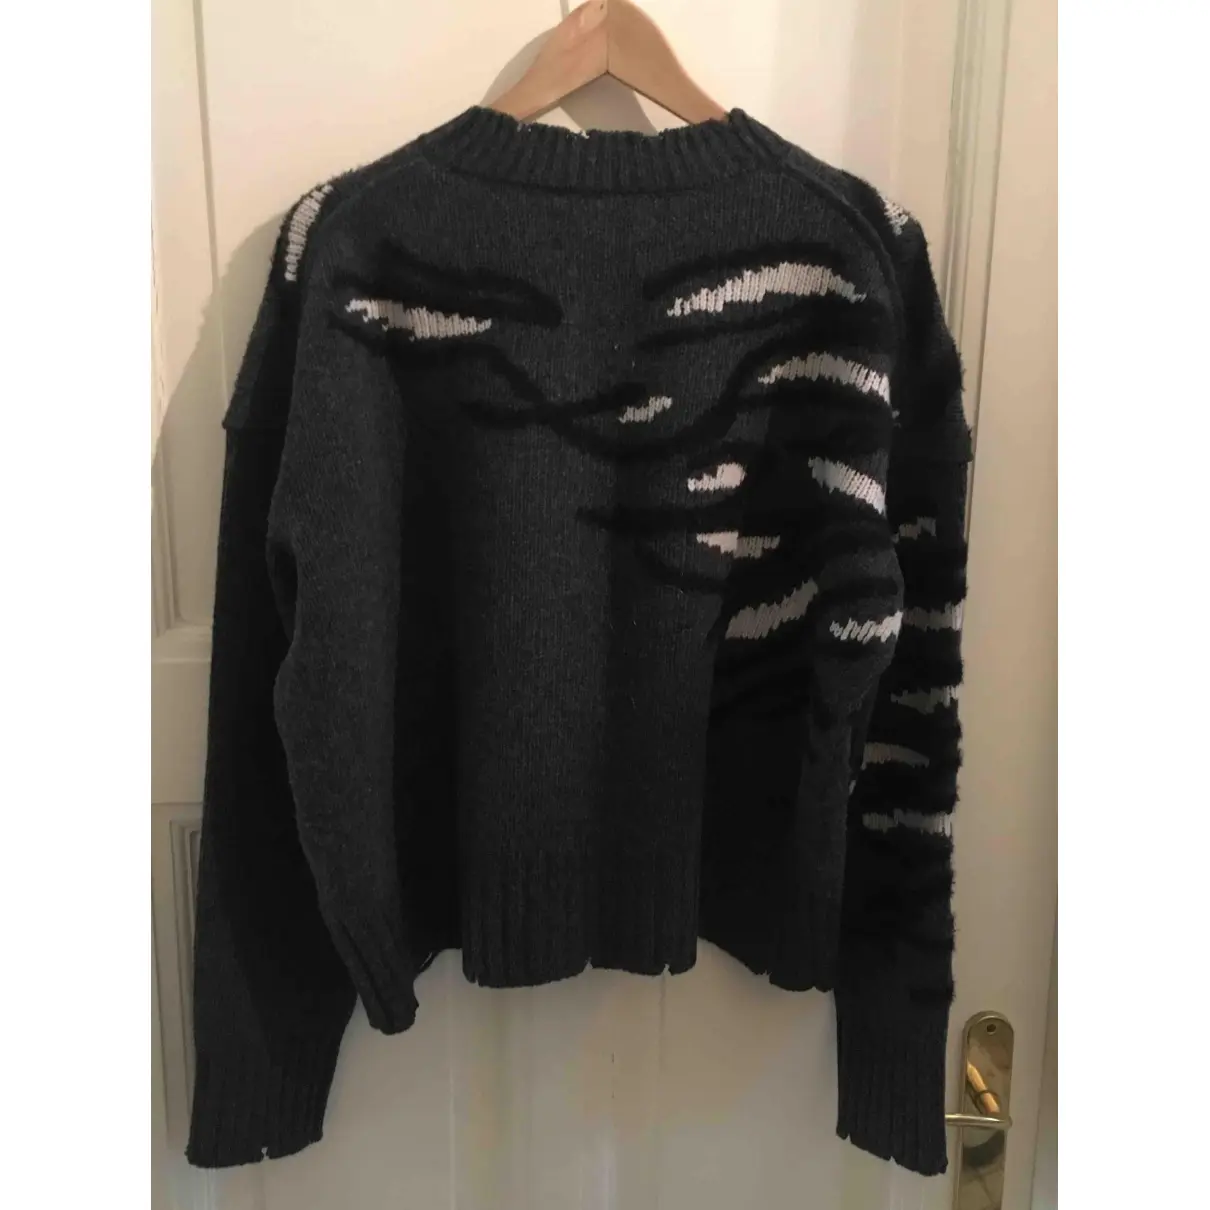 Buy Zadig & Voltaire Fall Winter 2020 wool jumper online